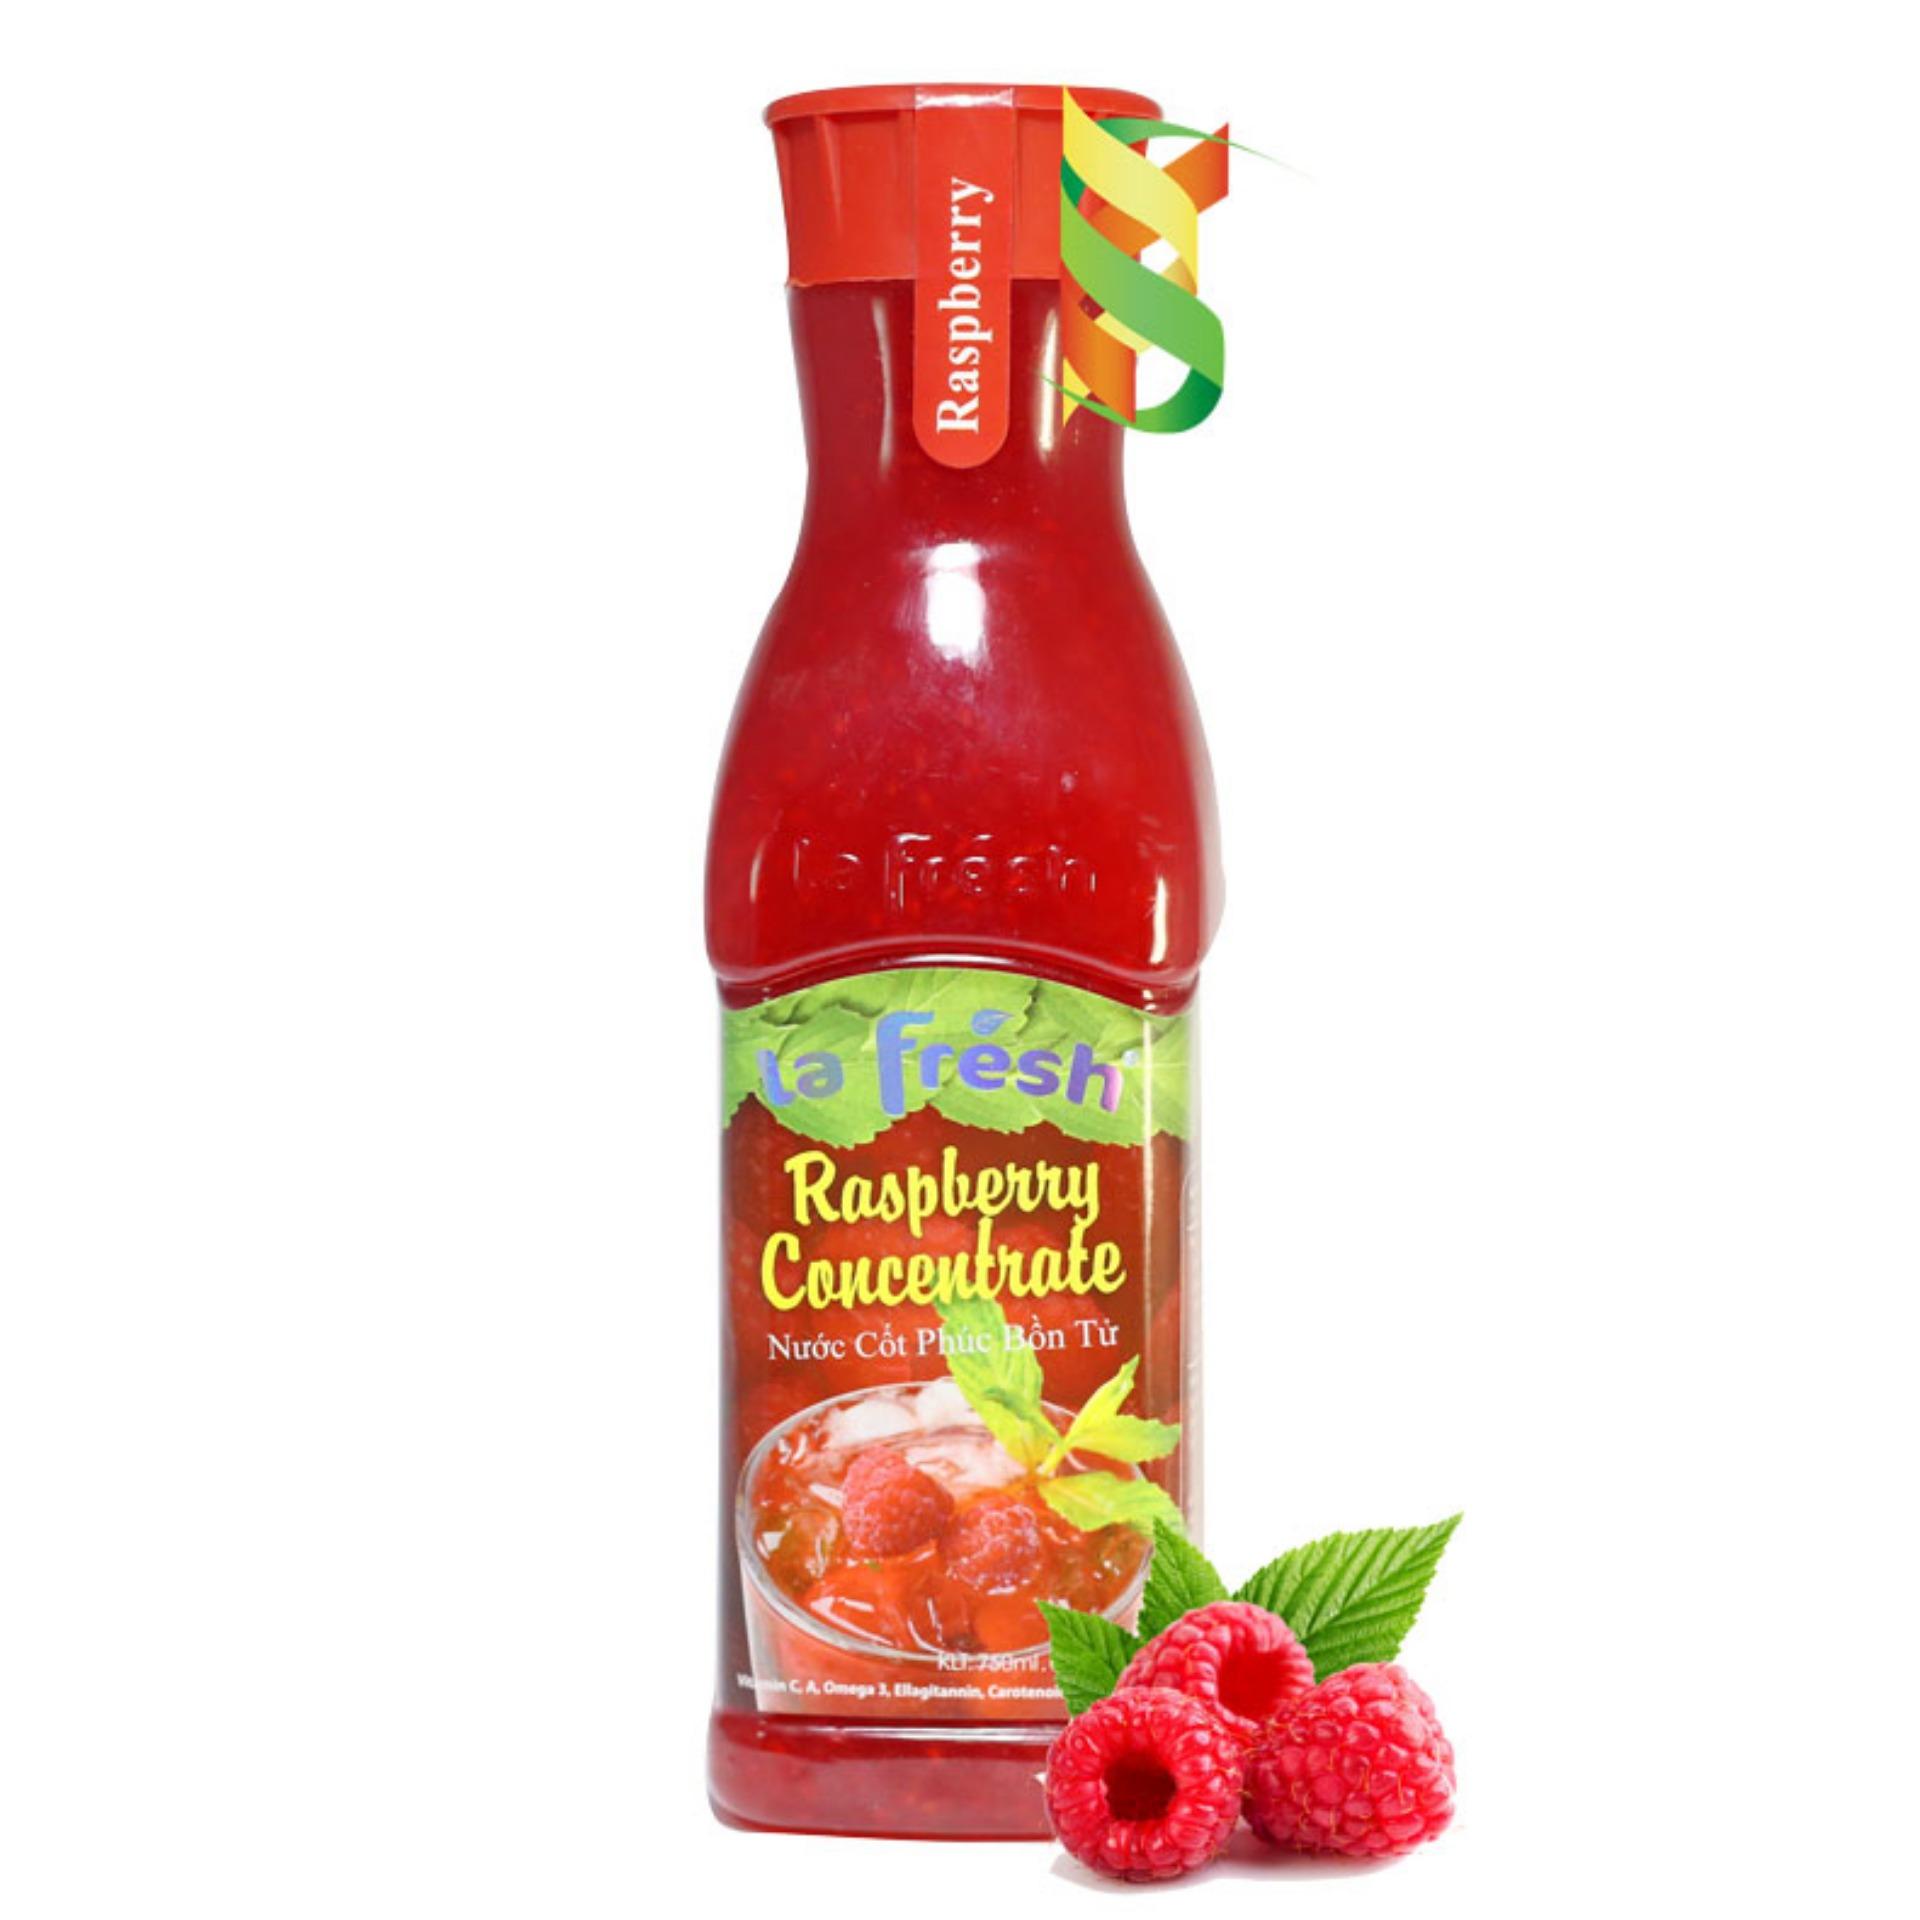 Nước cốt Phúc bồn tử La fresh 750ml - Raspberry Fruit Juice